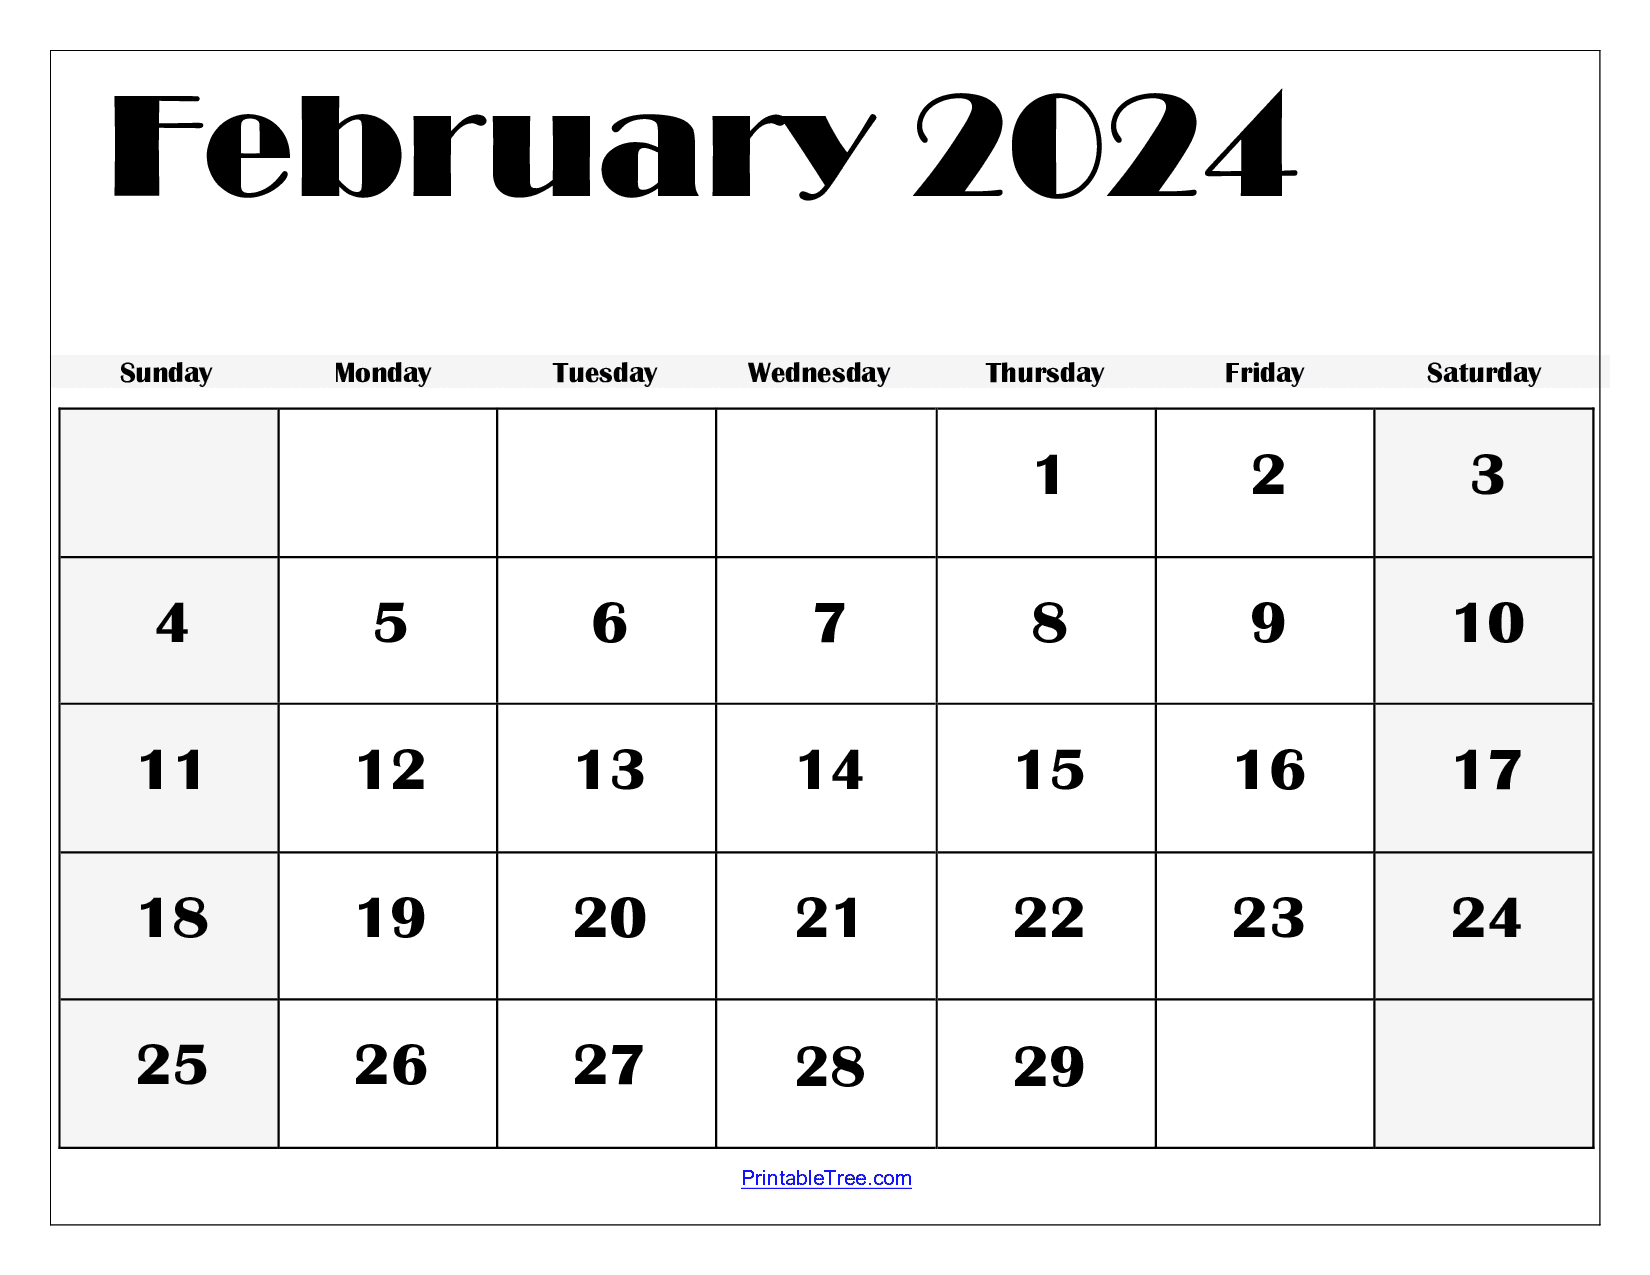 February 2024 Calendar Printable Pdf Template With Holidays for Feb 2024 Calendar Printable